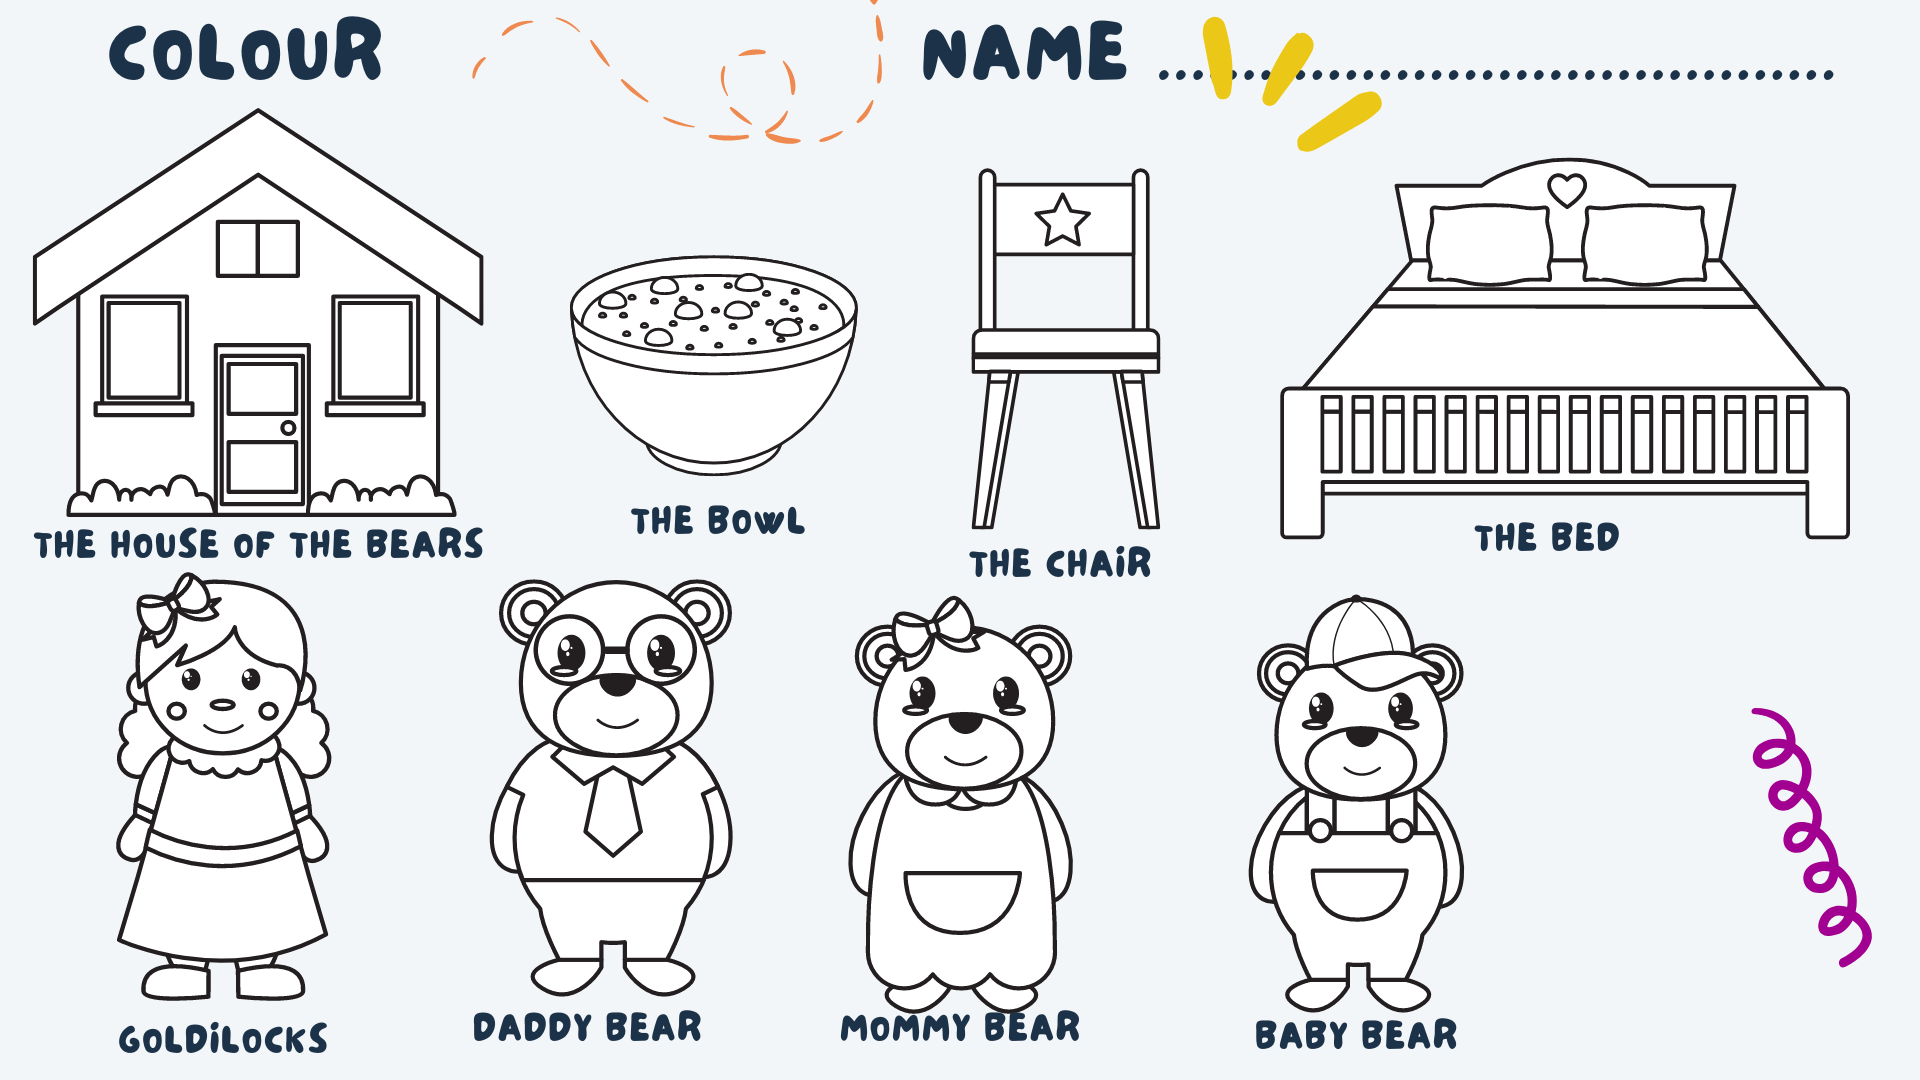 Goldilocks and the 3 bears vocabulary mat